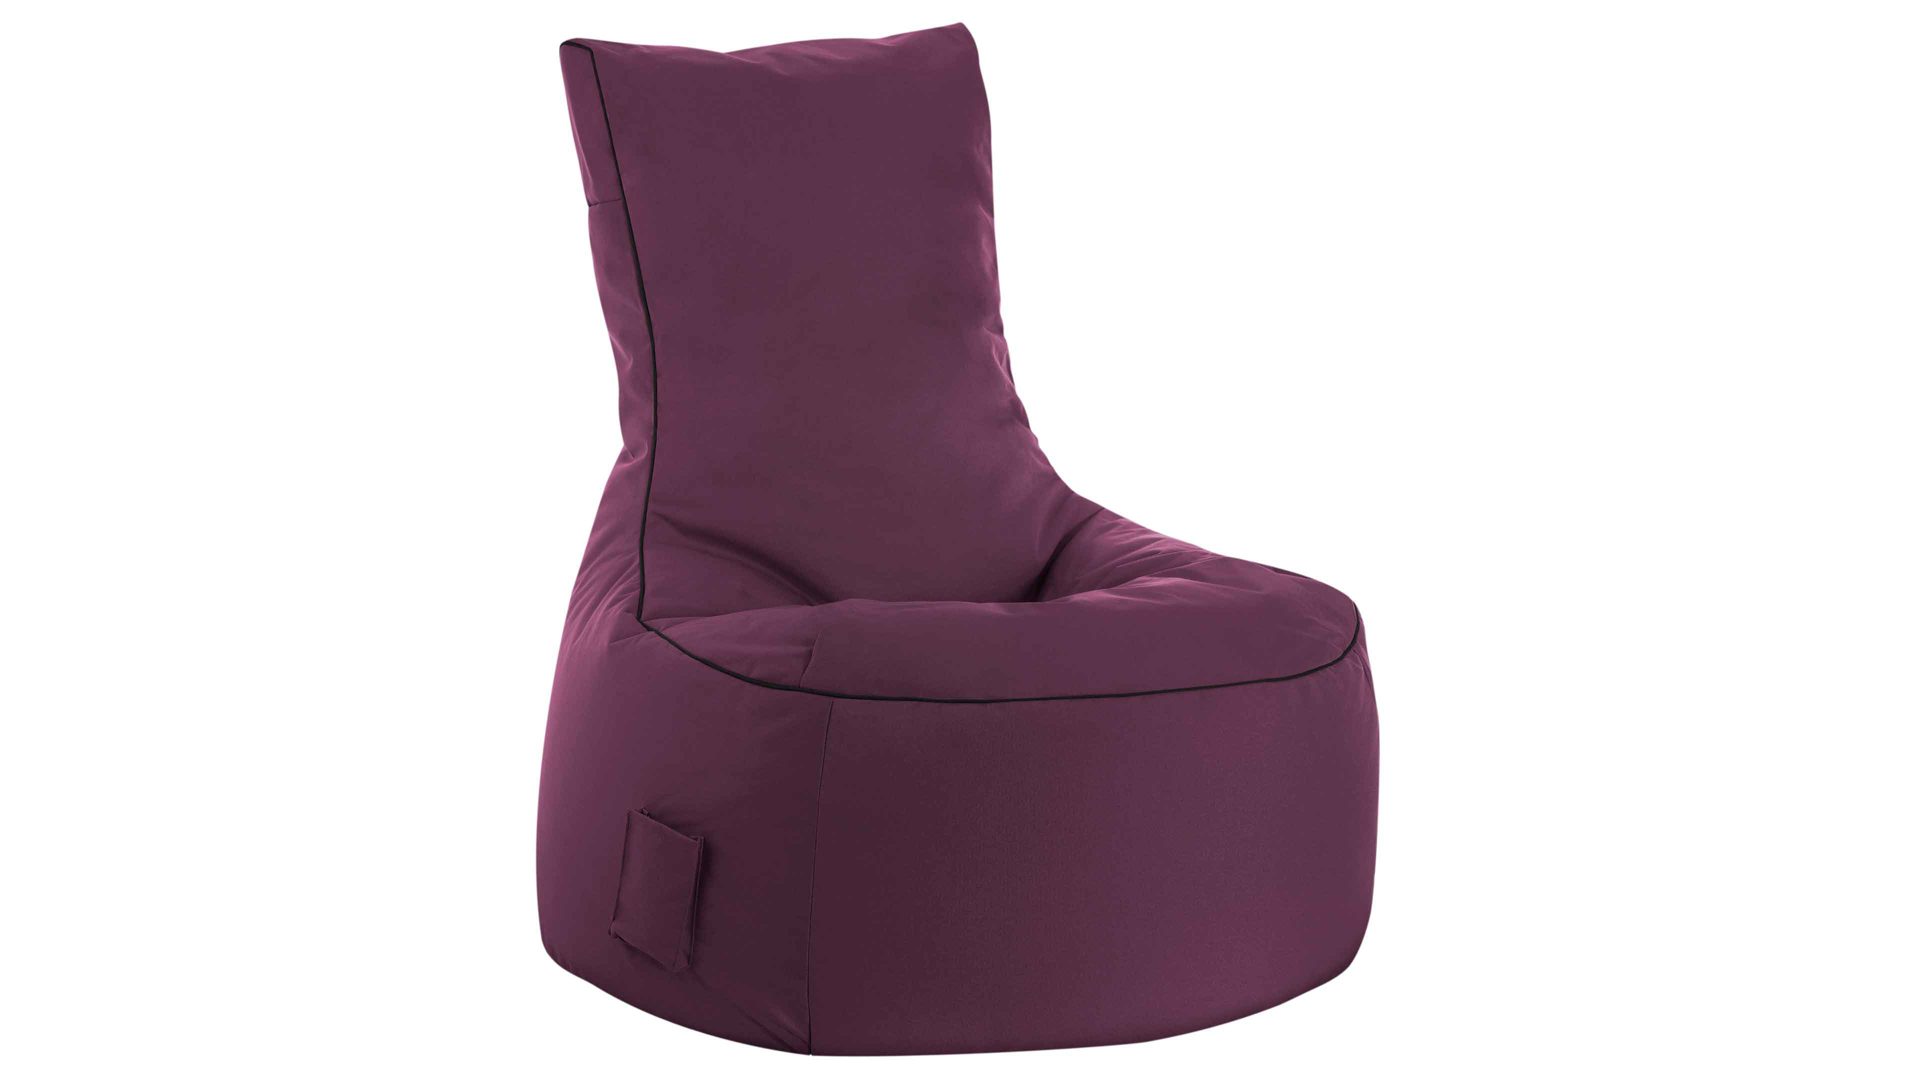 Sitzsack-Sessel Magma sitting point aus Kunstfaser in Lila SITTING POINT Sitzsack-Sessel swing scuba® auberginefarbene Kunstfaser - ca. 95 x 90 x 65 cm